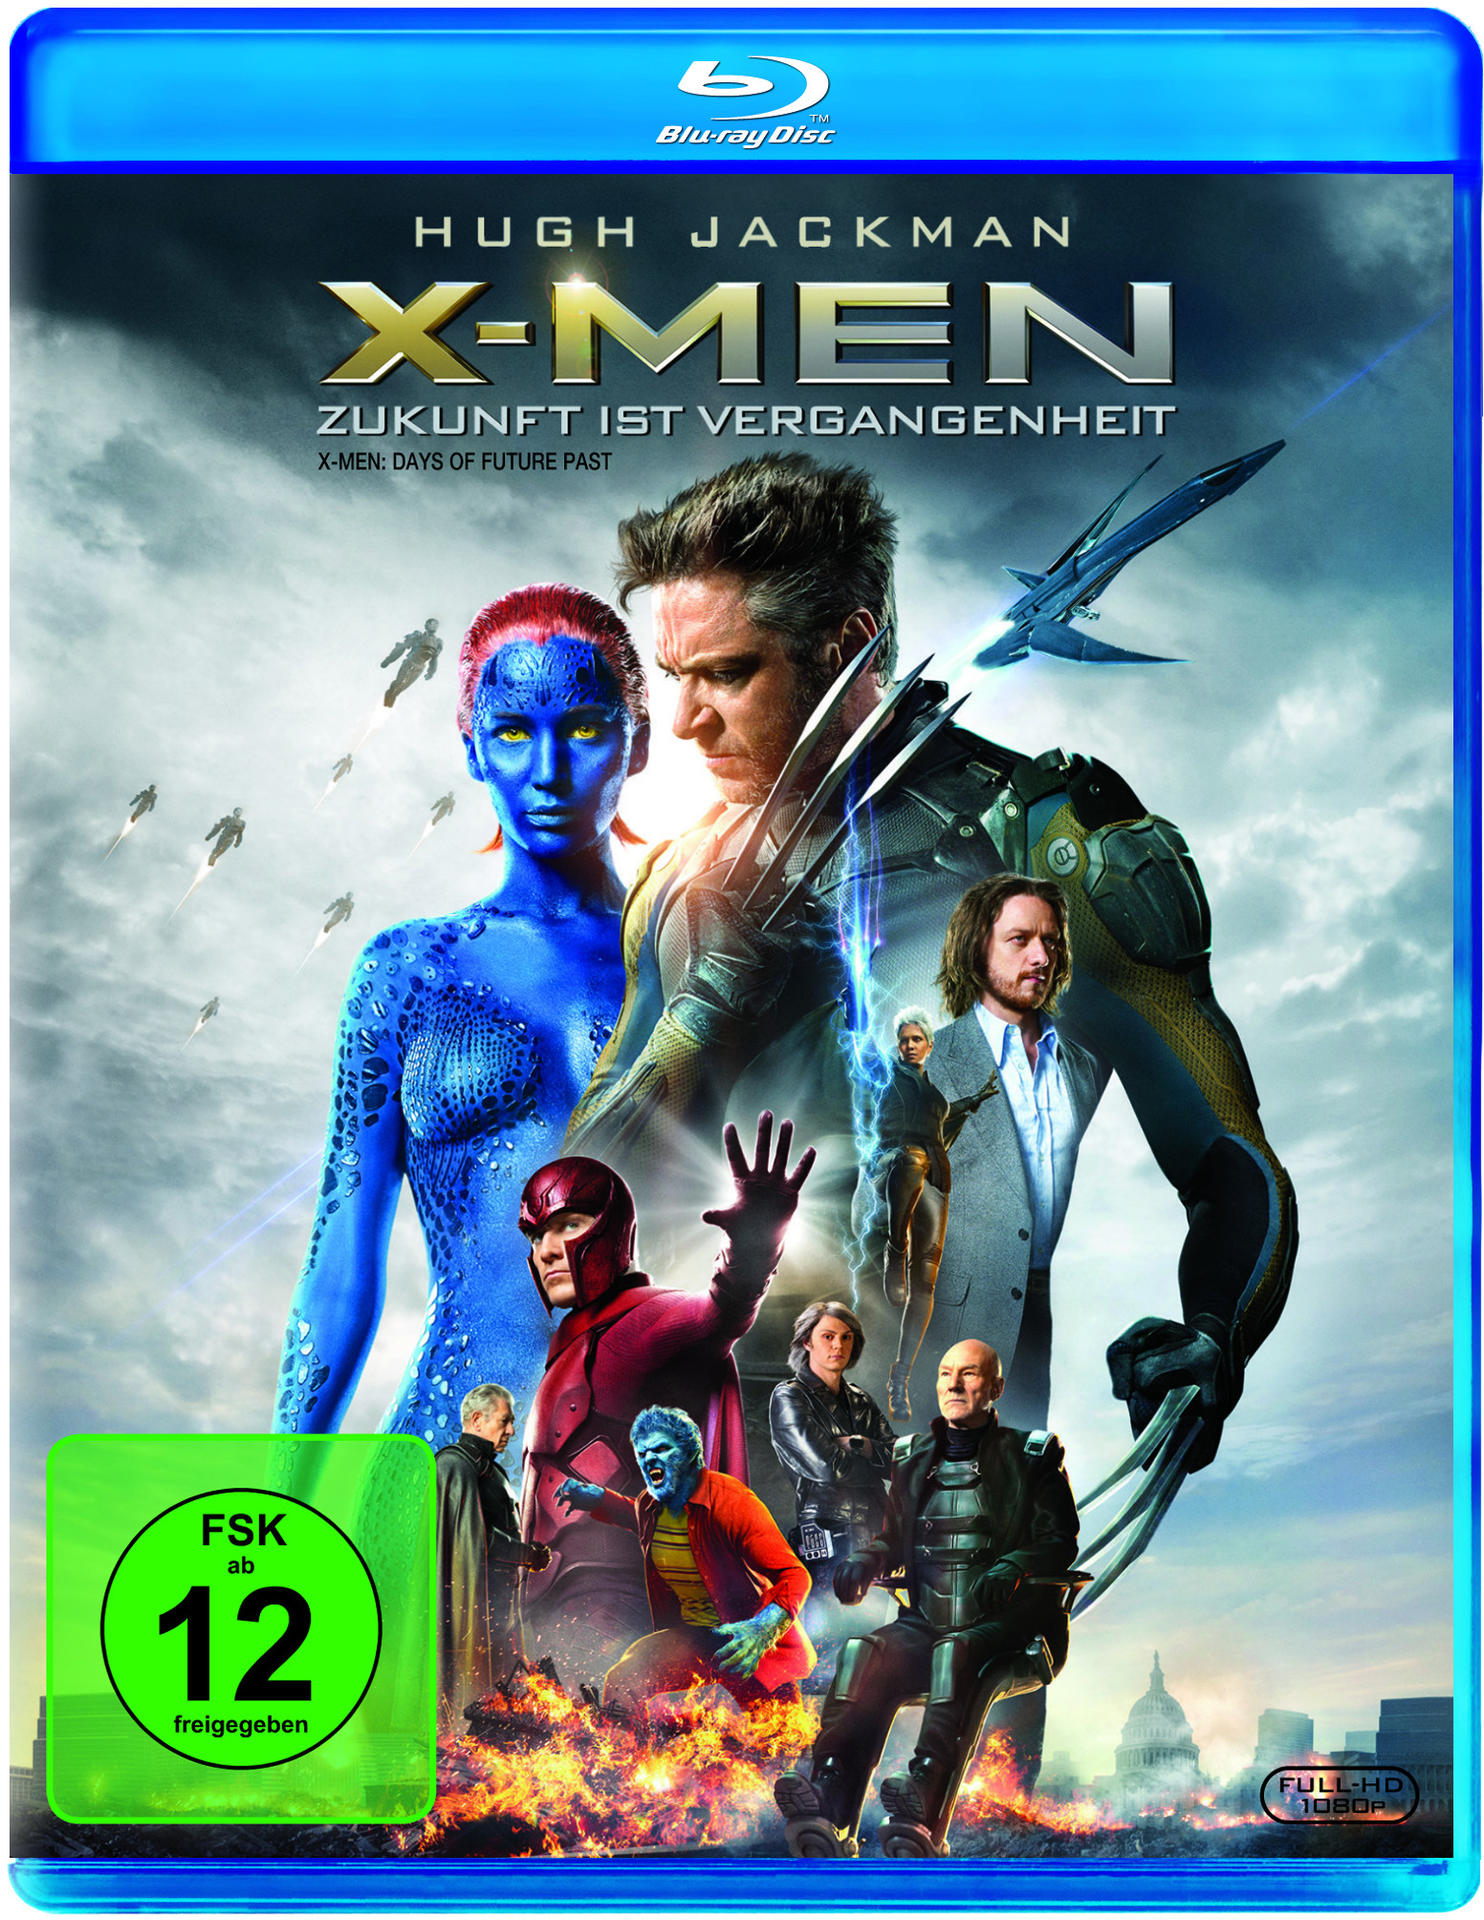 ist Vergangenheit Zukunft - X-Men Blu-ray